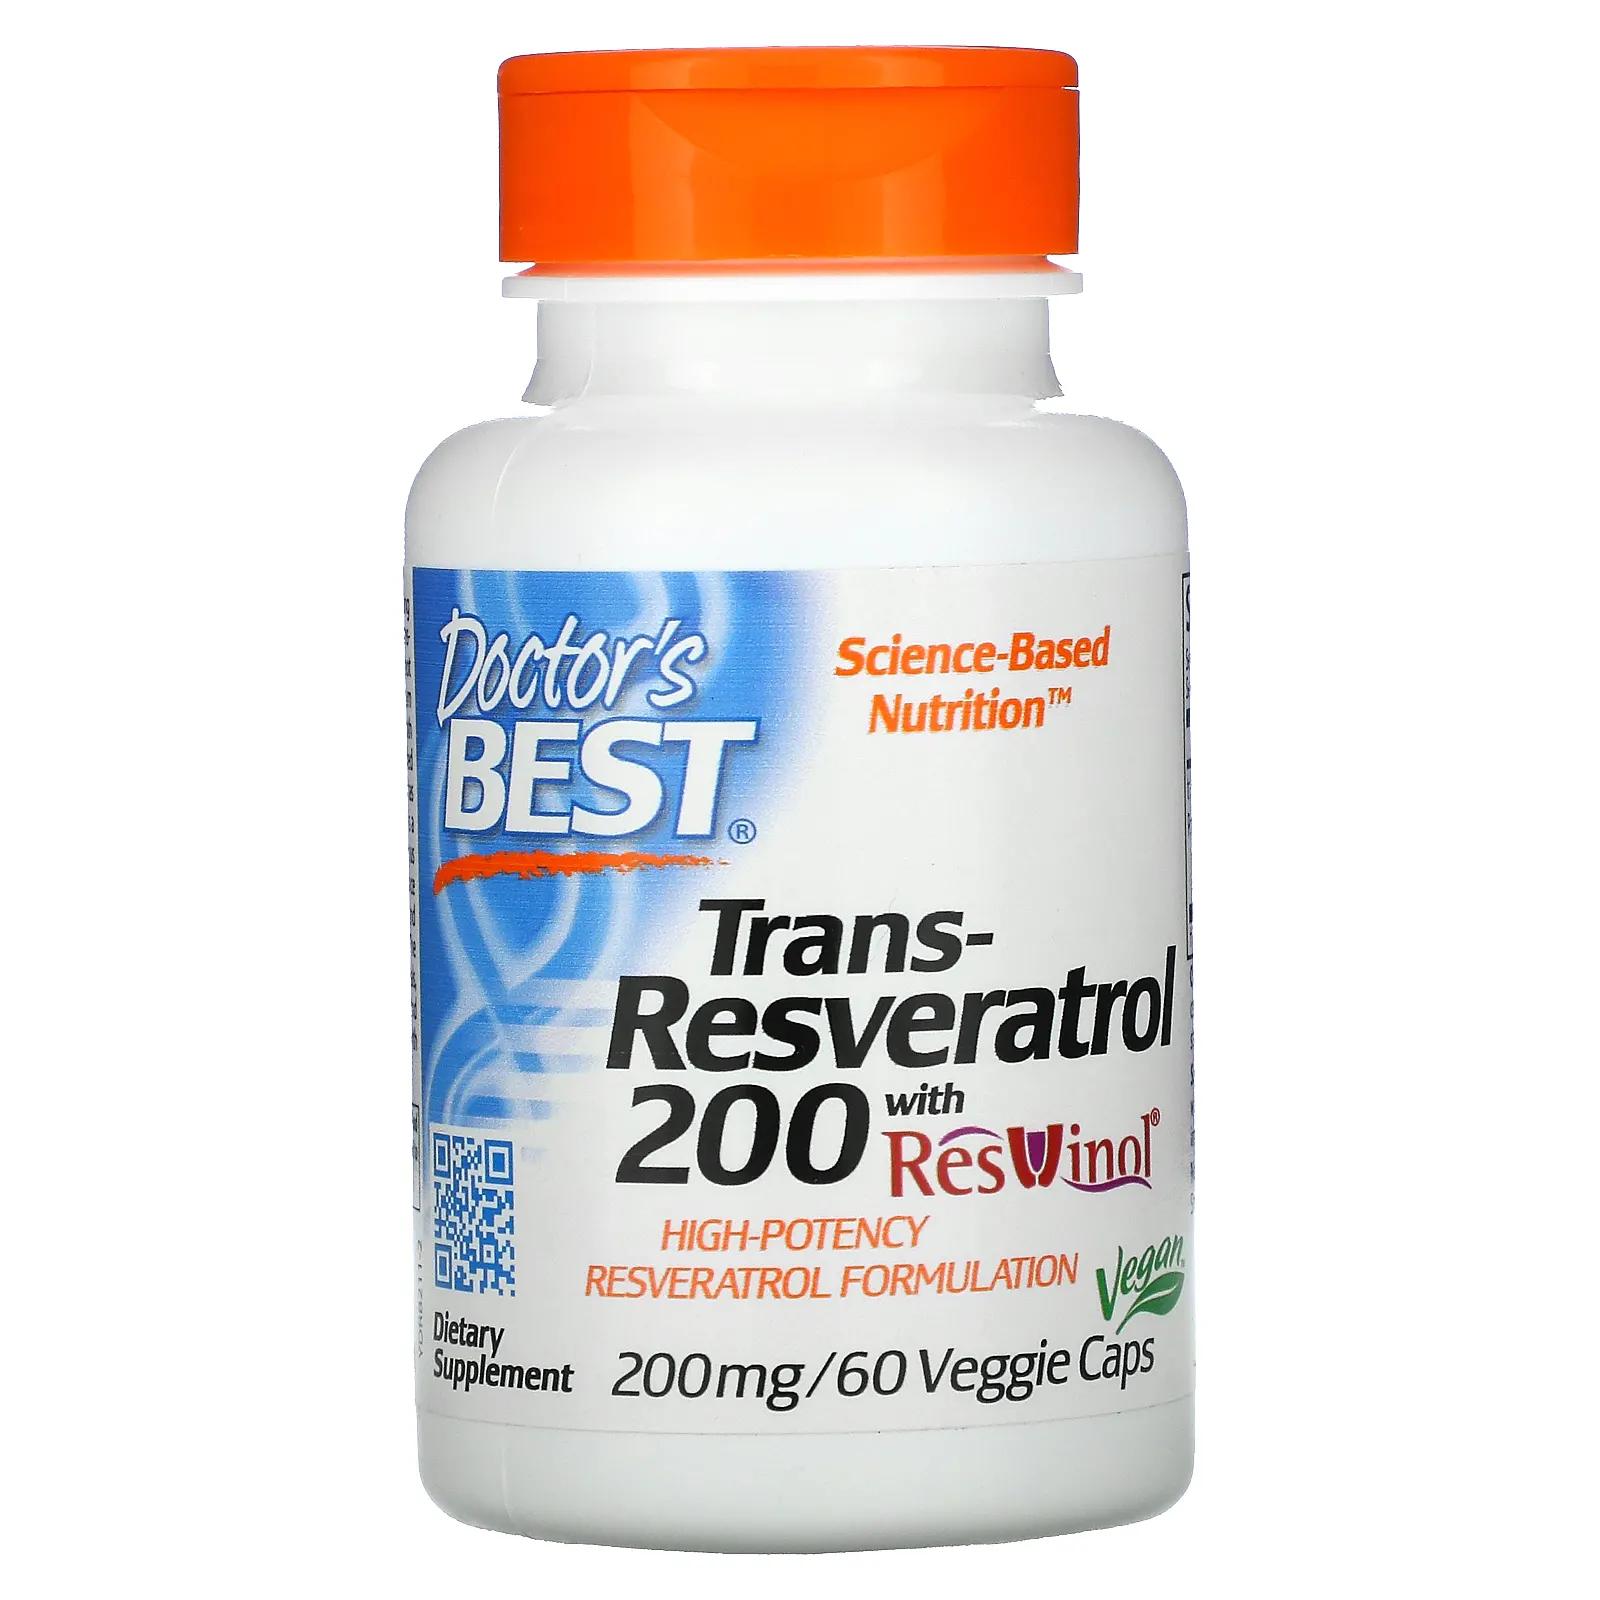 Doctor's Best Trans-Resveratrol with Resvinol 200 mg 60 Veggie Caps